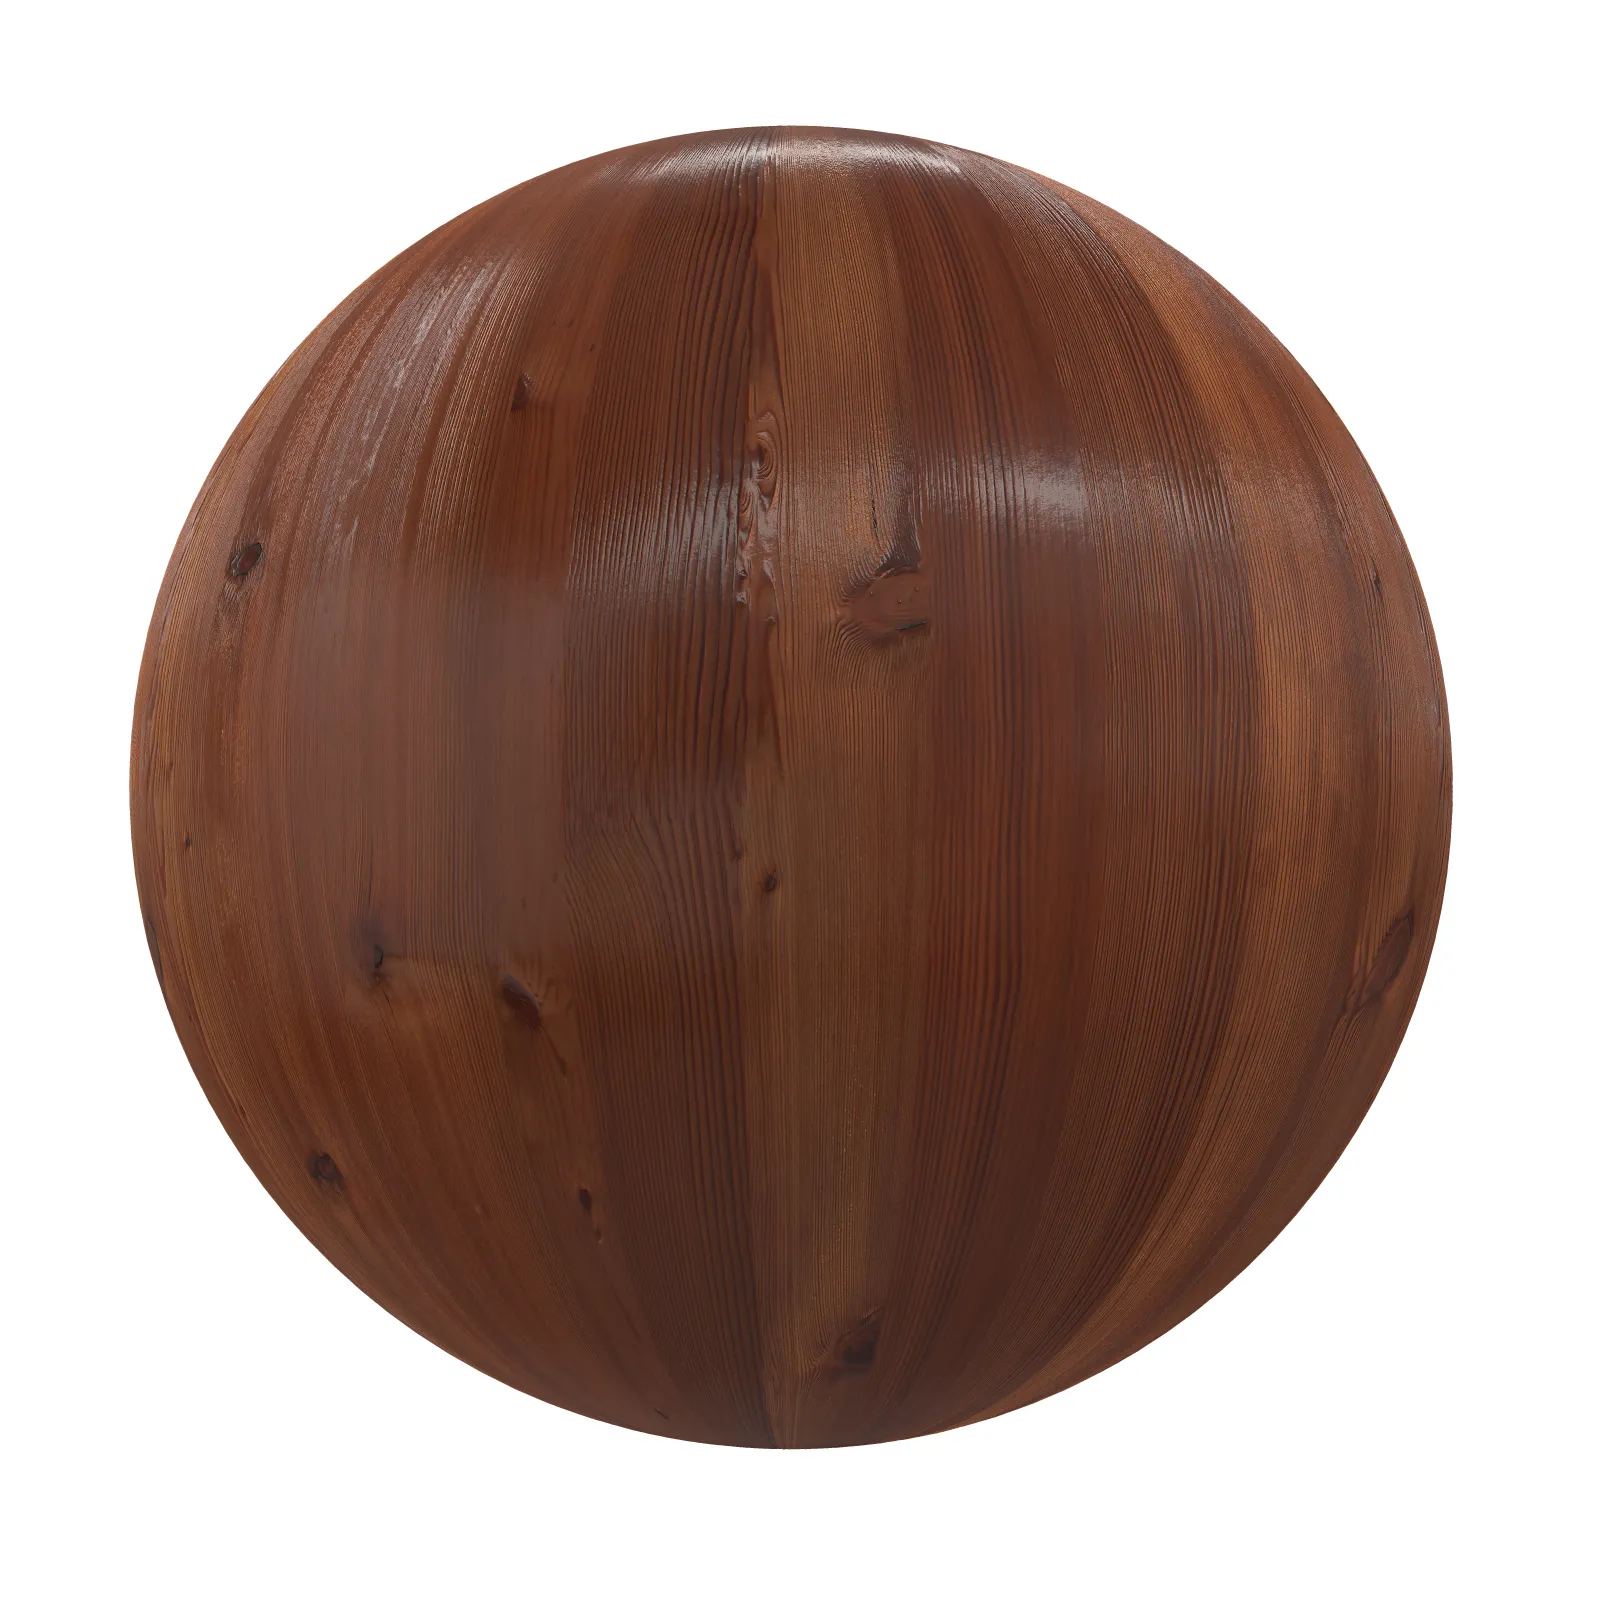 3ds Max Files – Texture – 8 – Wood Texture – 76 – Wood Texture by Minh Nguyen